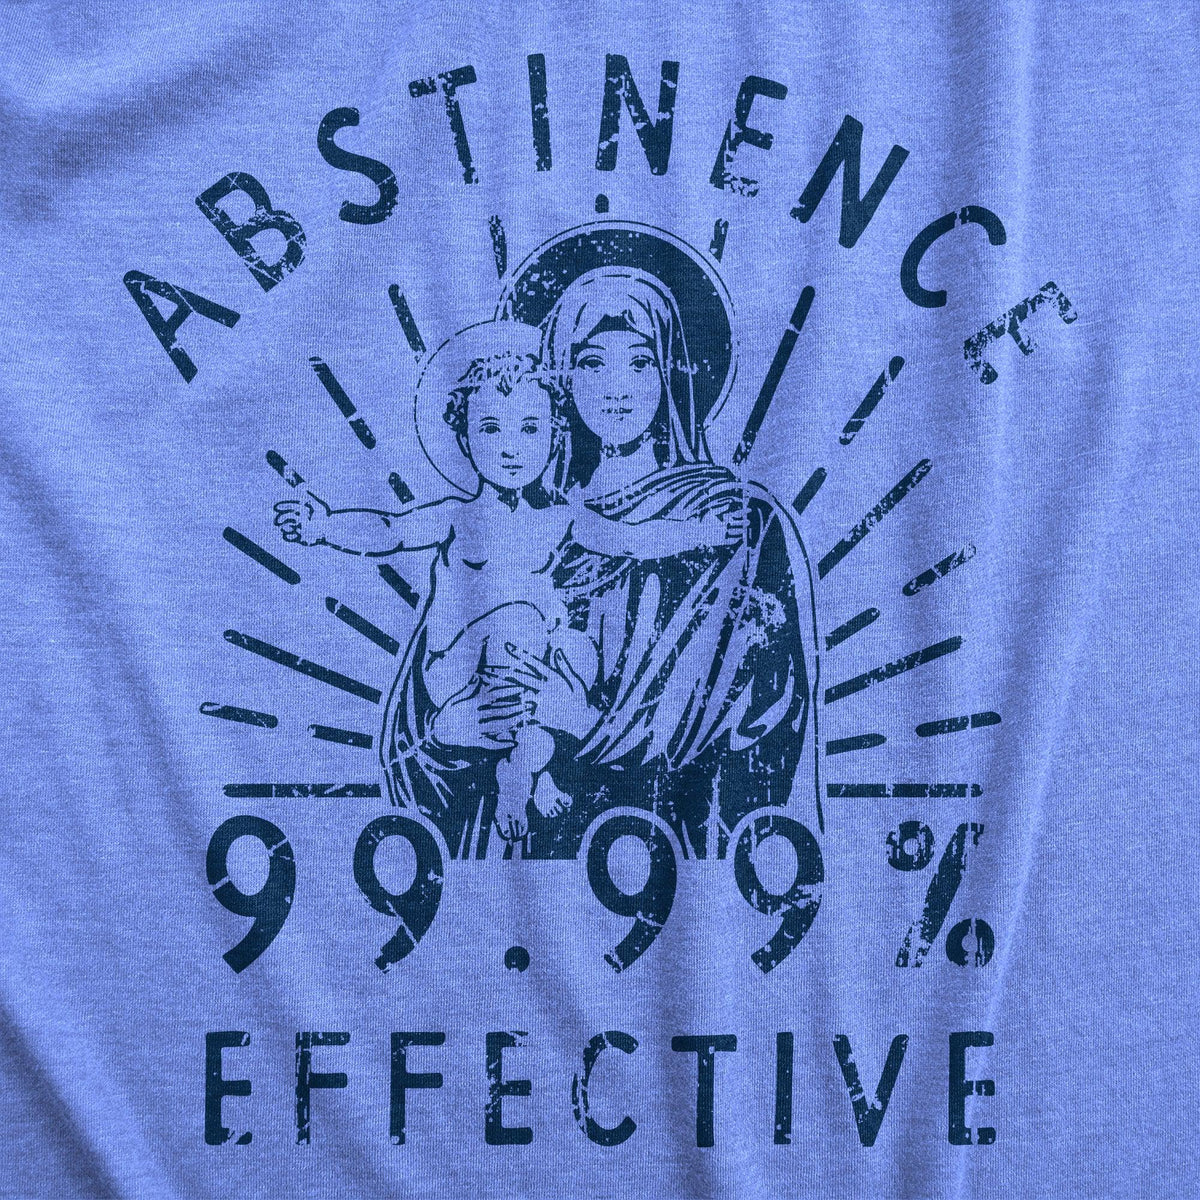 Abstinence 99.99 Percent Effective Men&#39;s Tshirt  -  Crazy Dog T-Shirts